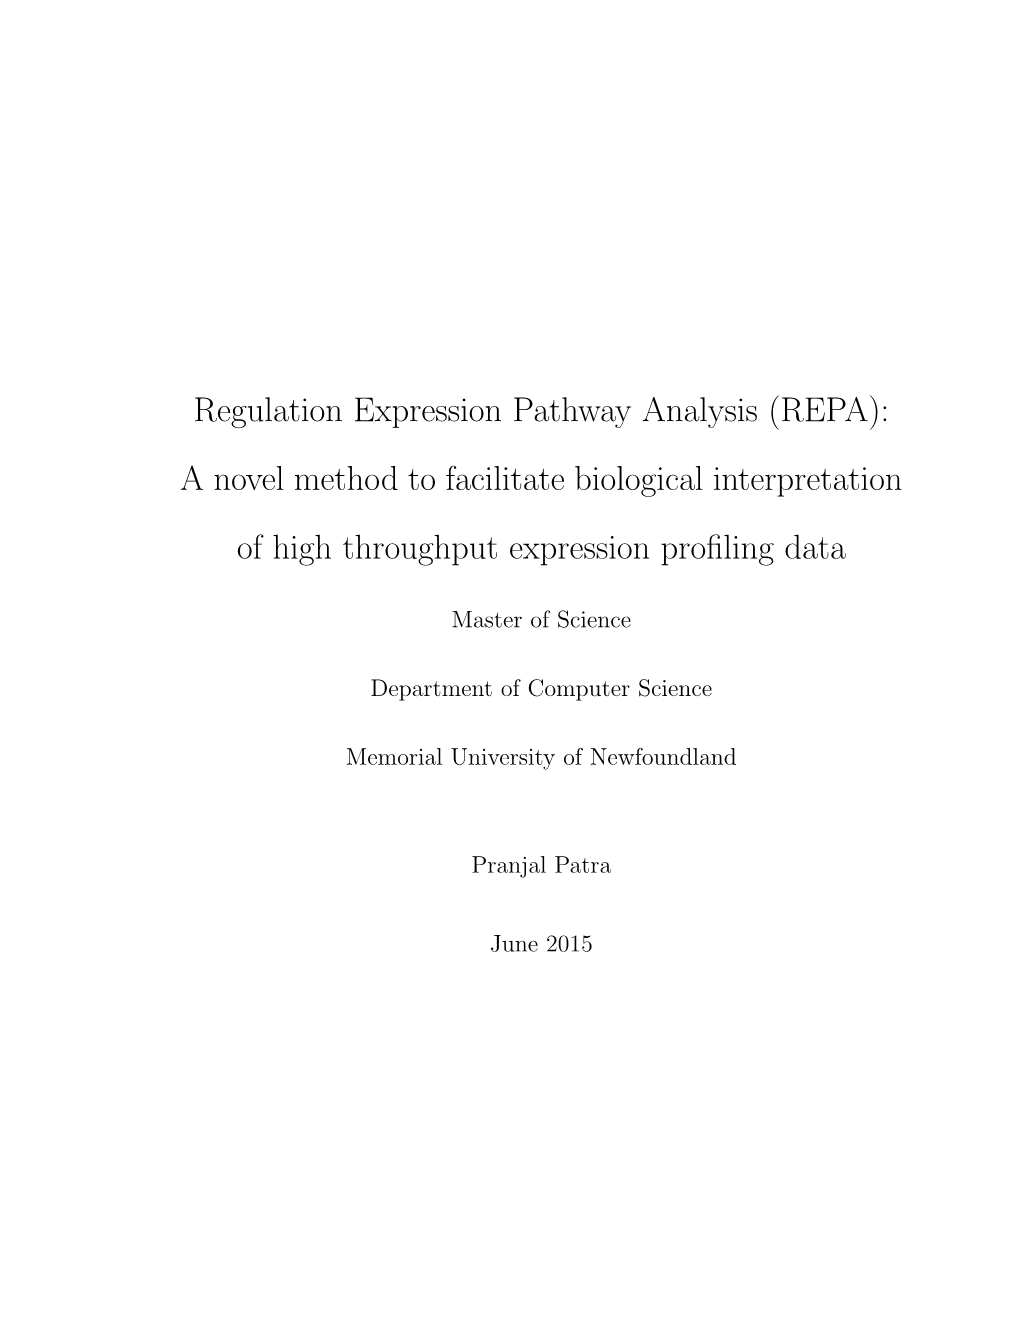 Regulation Expression Pathway Analysis (REPA): a Novel Method to Facilitate Biological Interpretation of High Throughput Expression Proﬁling Data